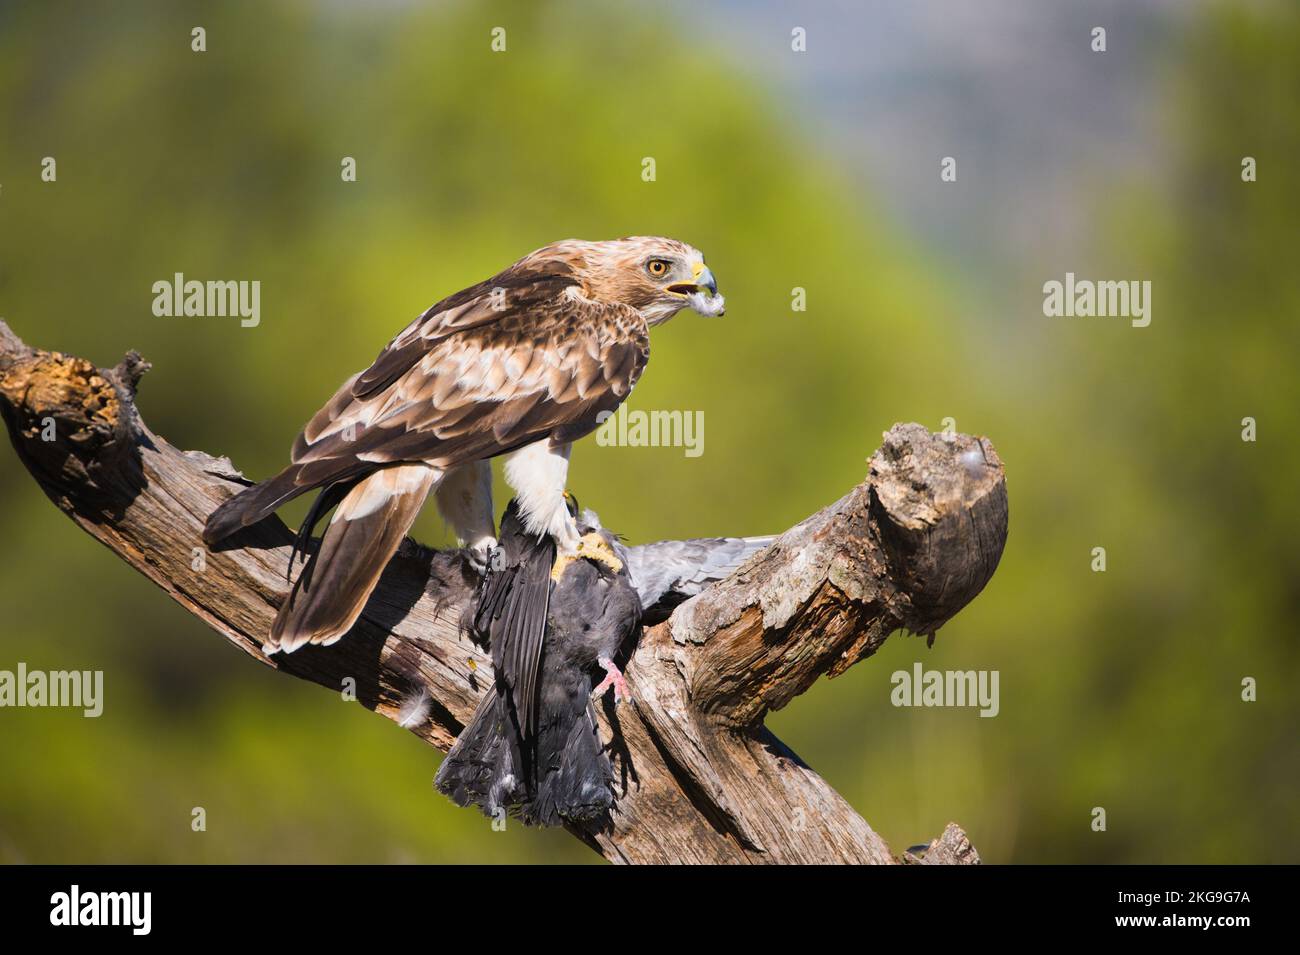 Aguila calzada alimentandose con una paloma Banque D'Images